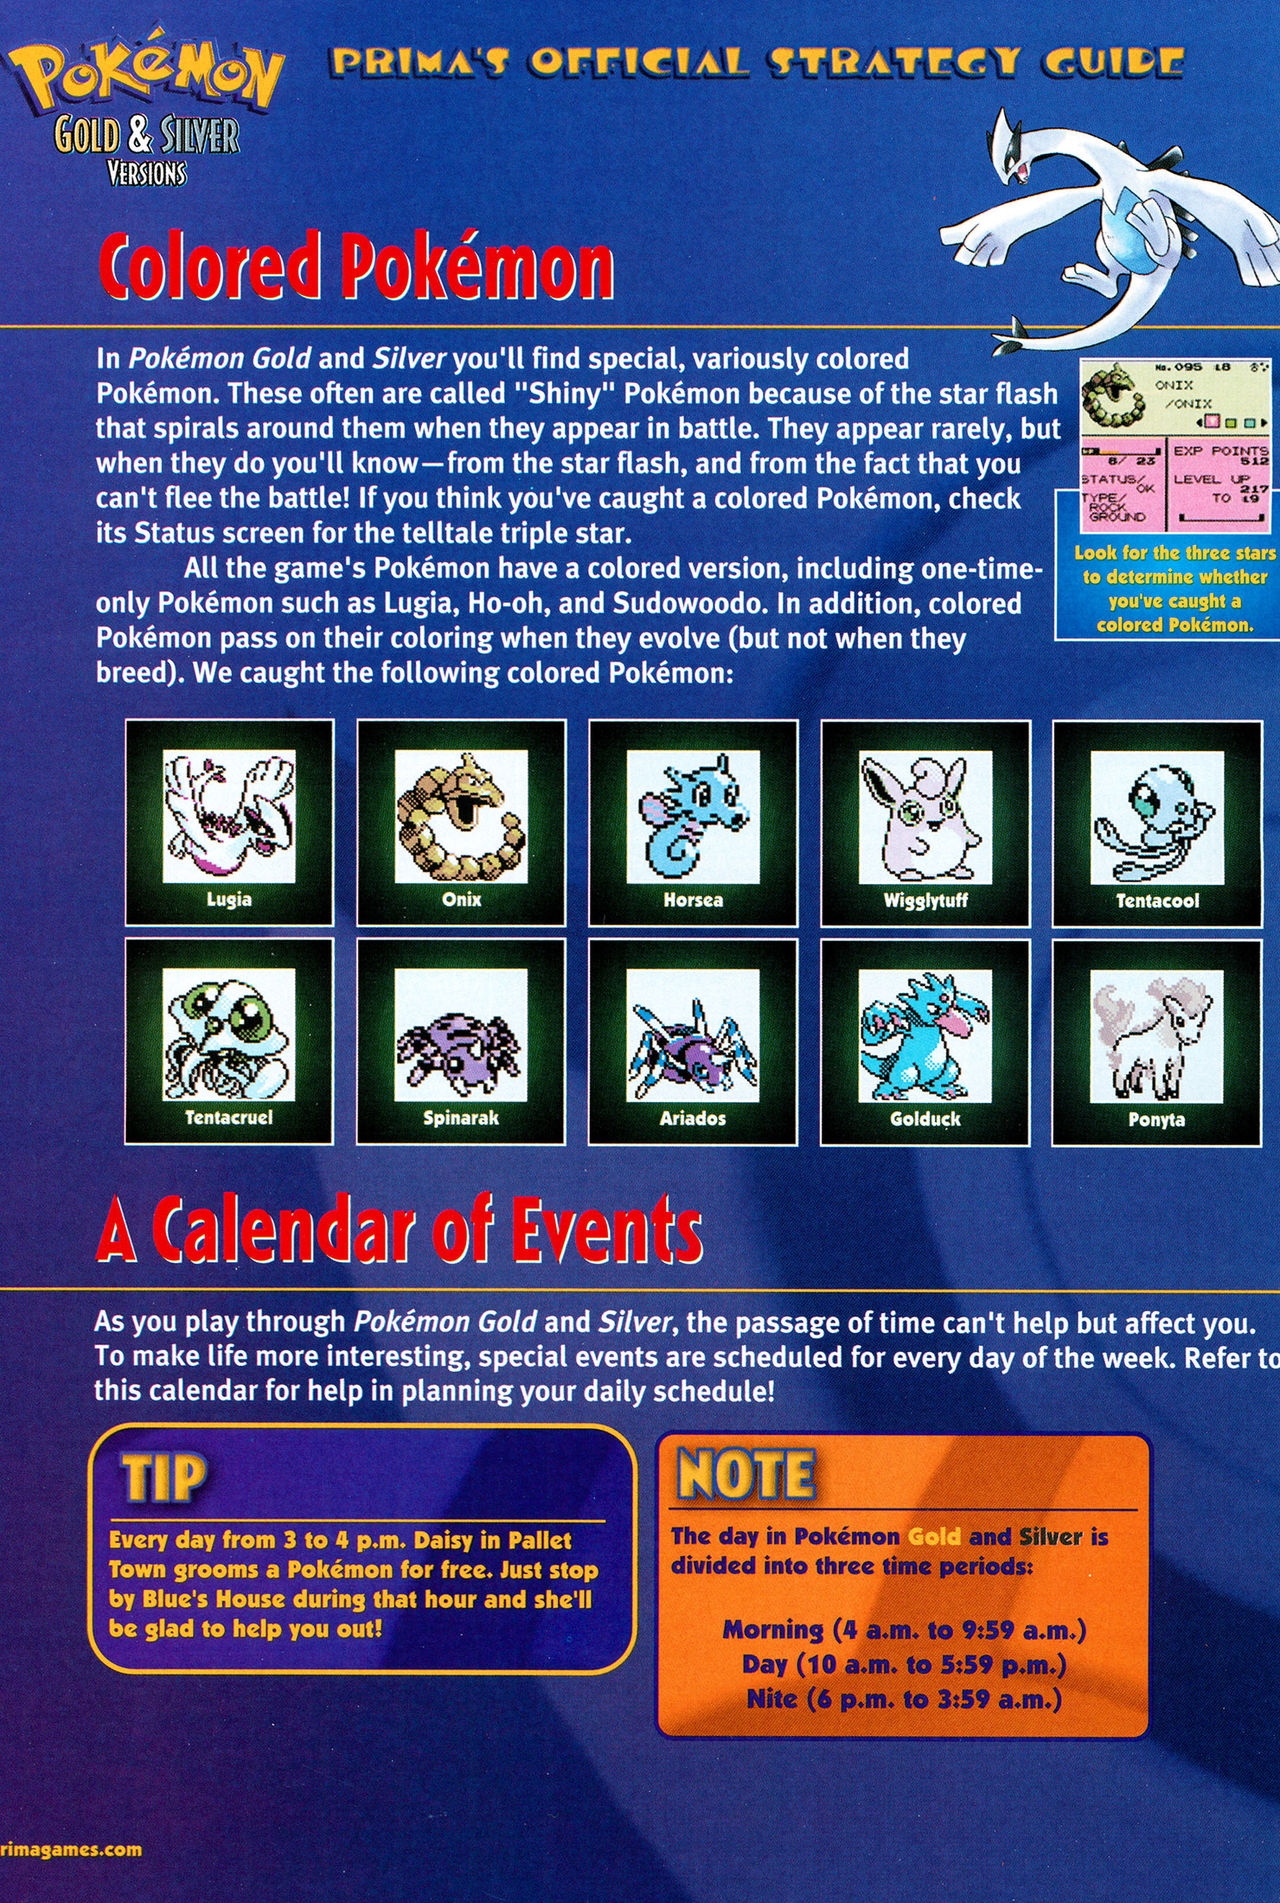 Pokémon Gold & Silver Versions - Strategy Guide 191